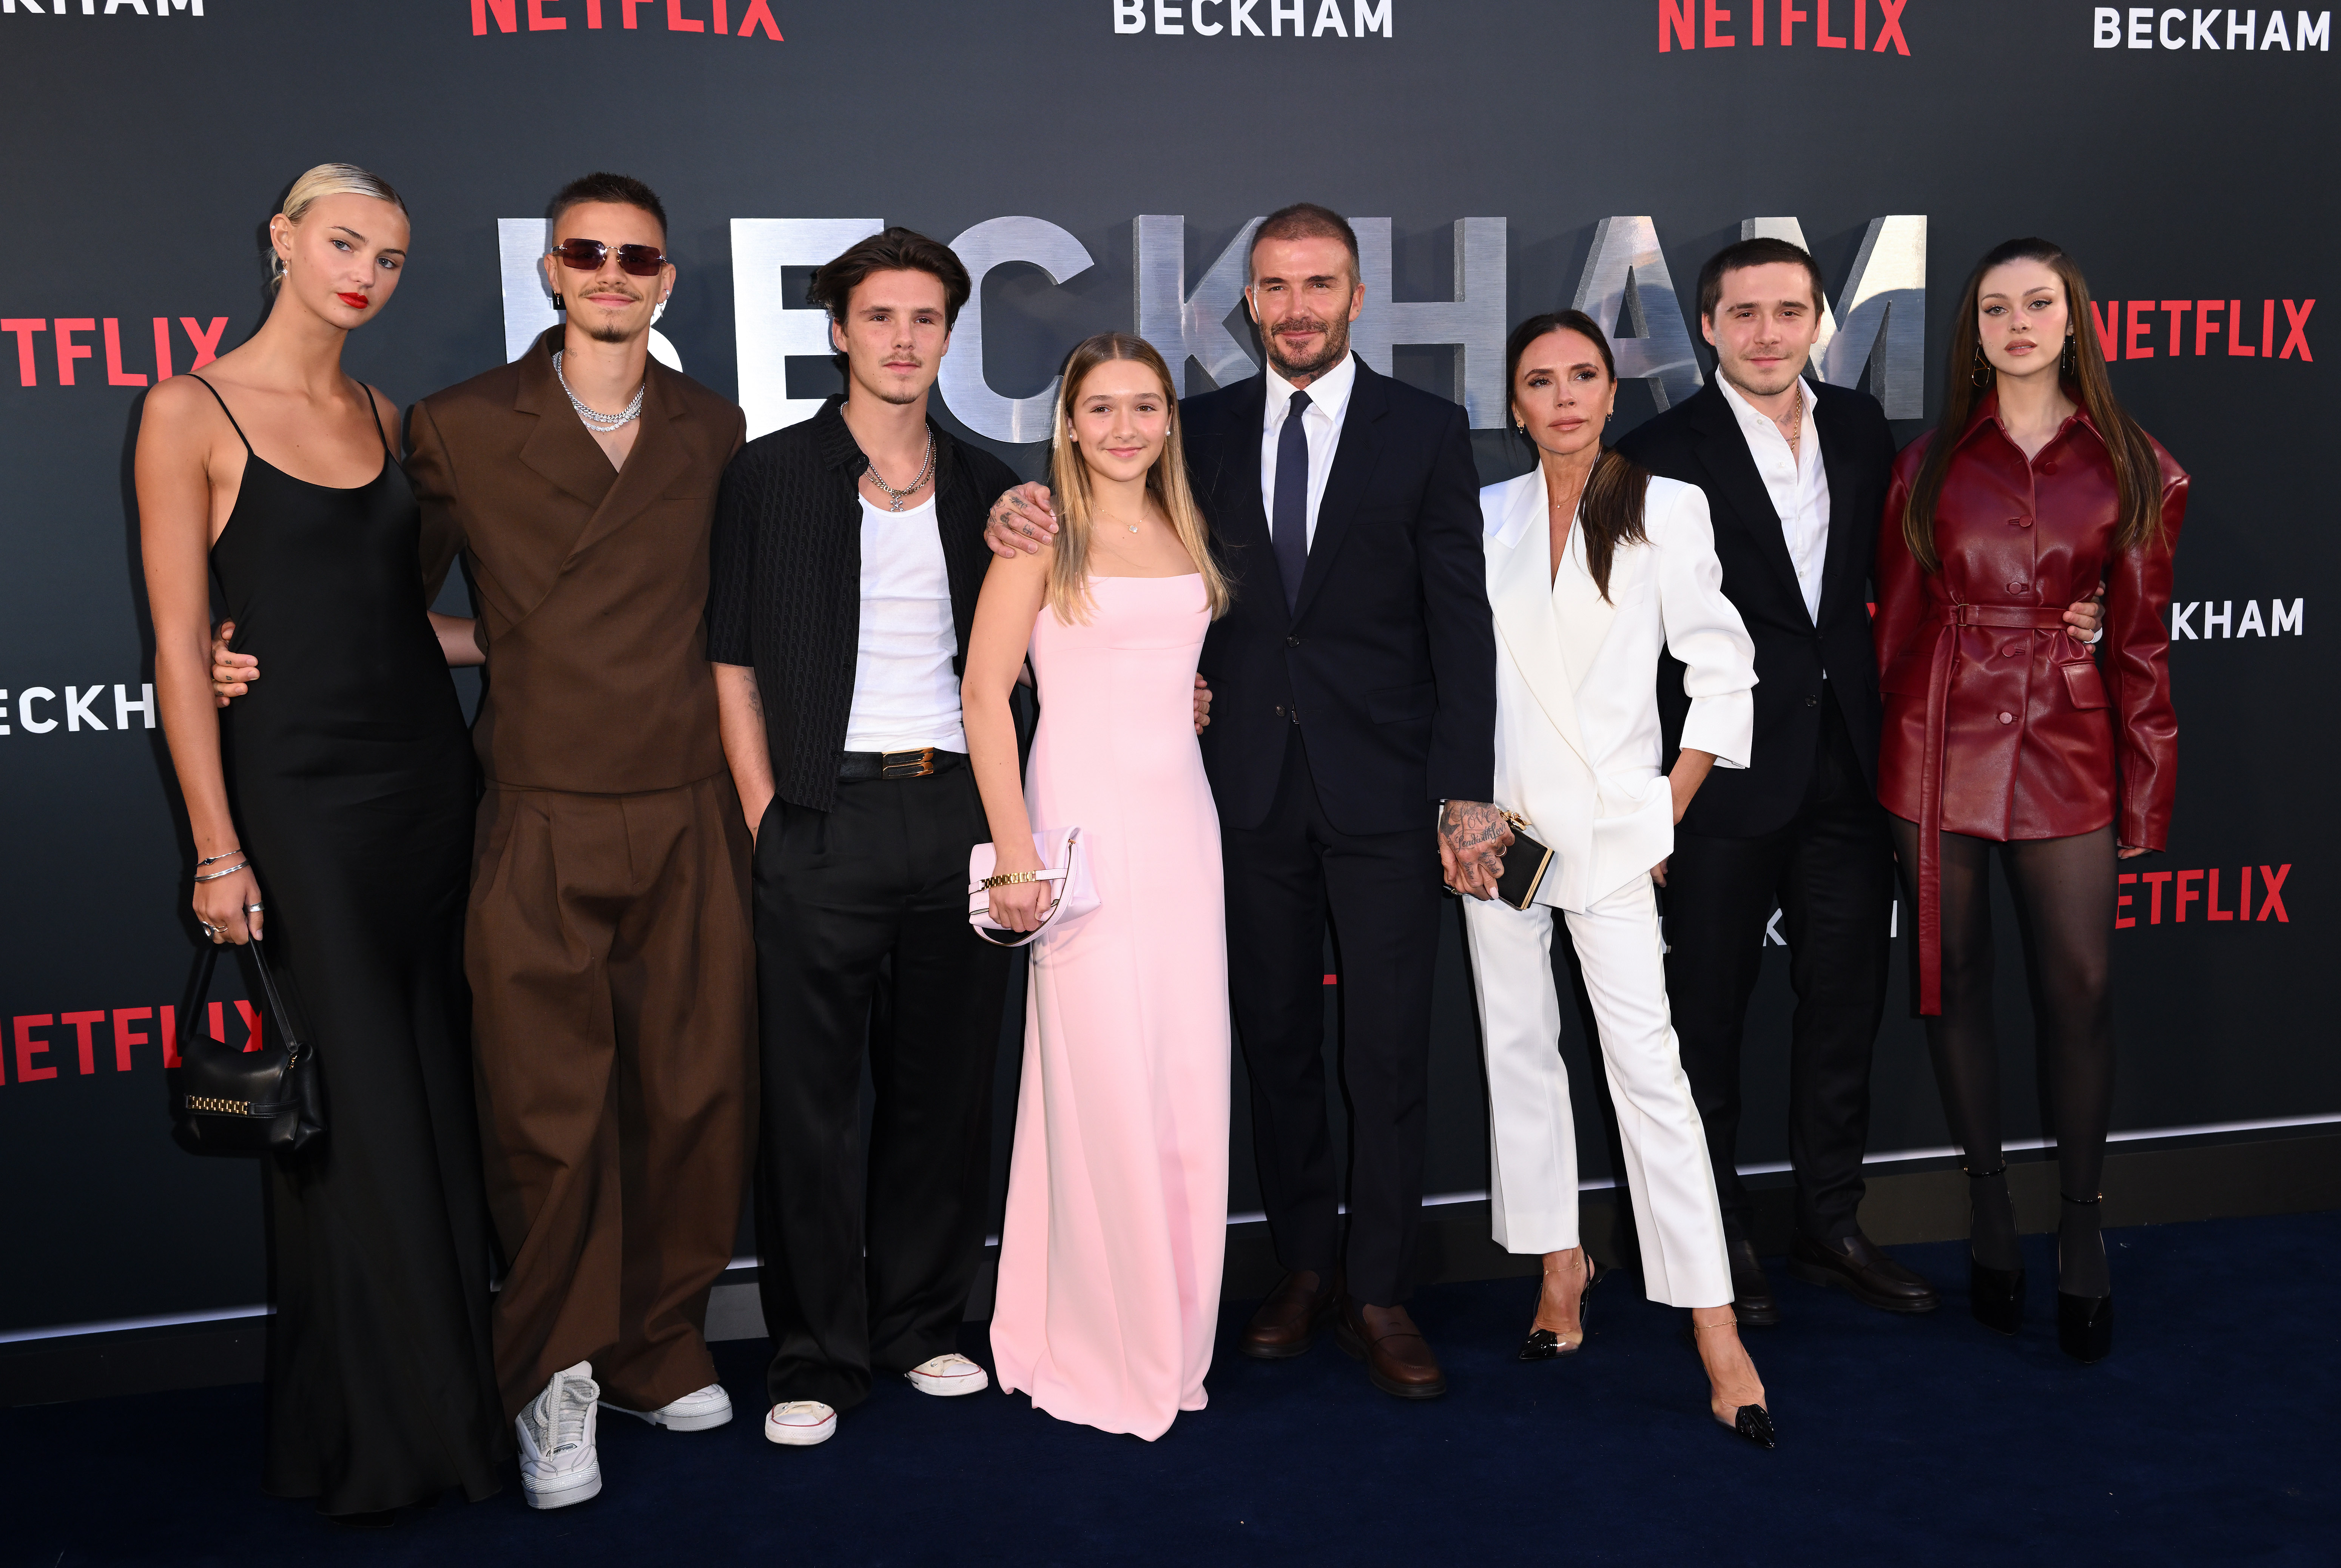 Mia Regan, Romeo Beckham, Cruz Beckham, Harper Beckham, David Beckham, Victoria Beckham, Brooklyn Beckham, and Nicola Peltz attend the premiere of Netflix's "Beckham" in London on October 3, 2023 | Source: Getty Images